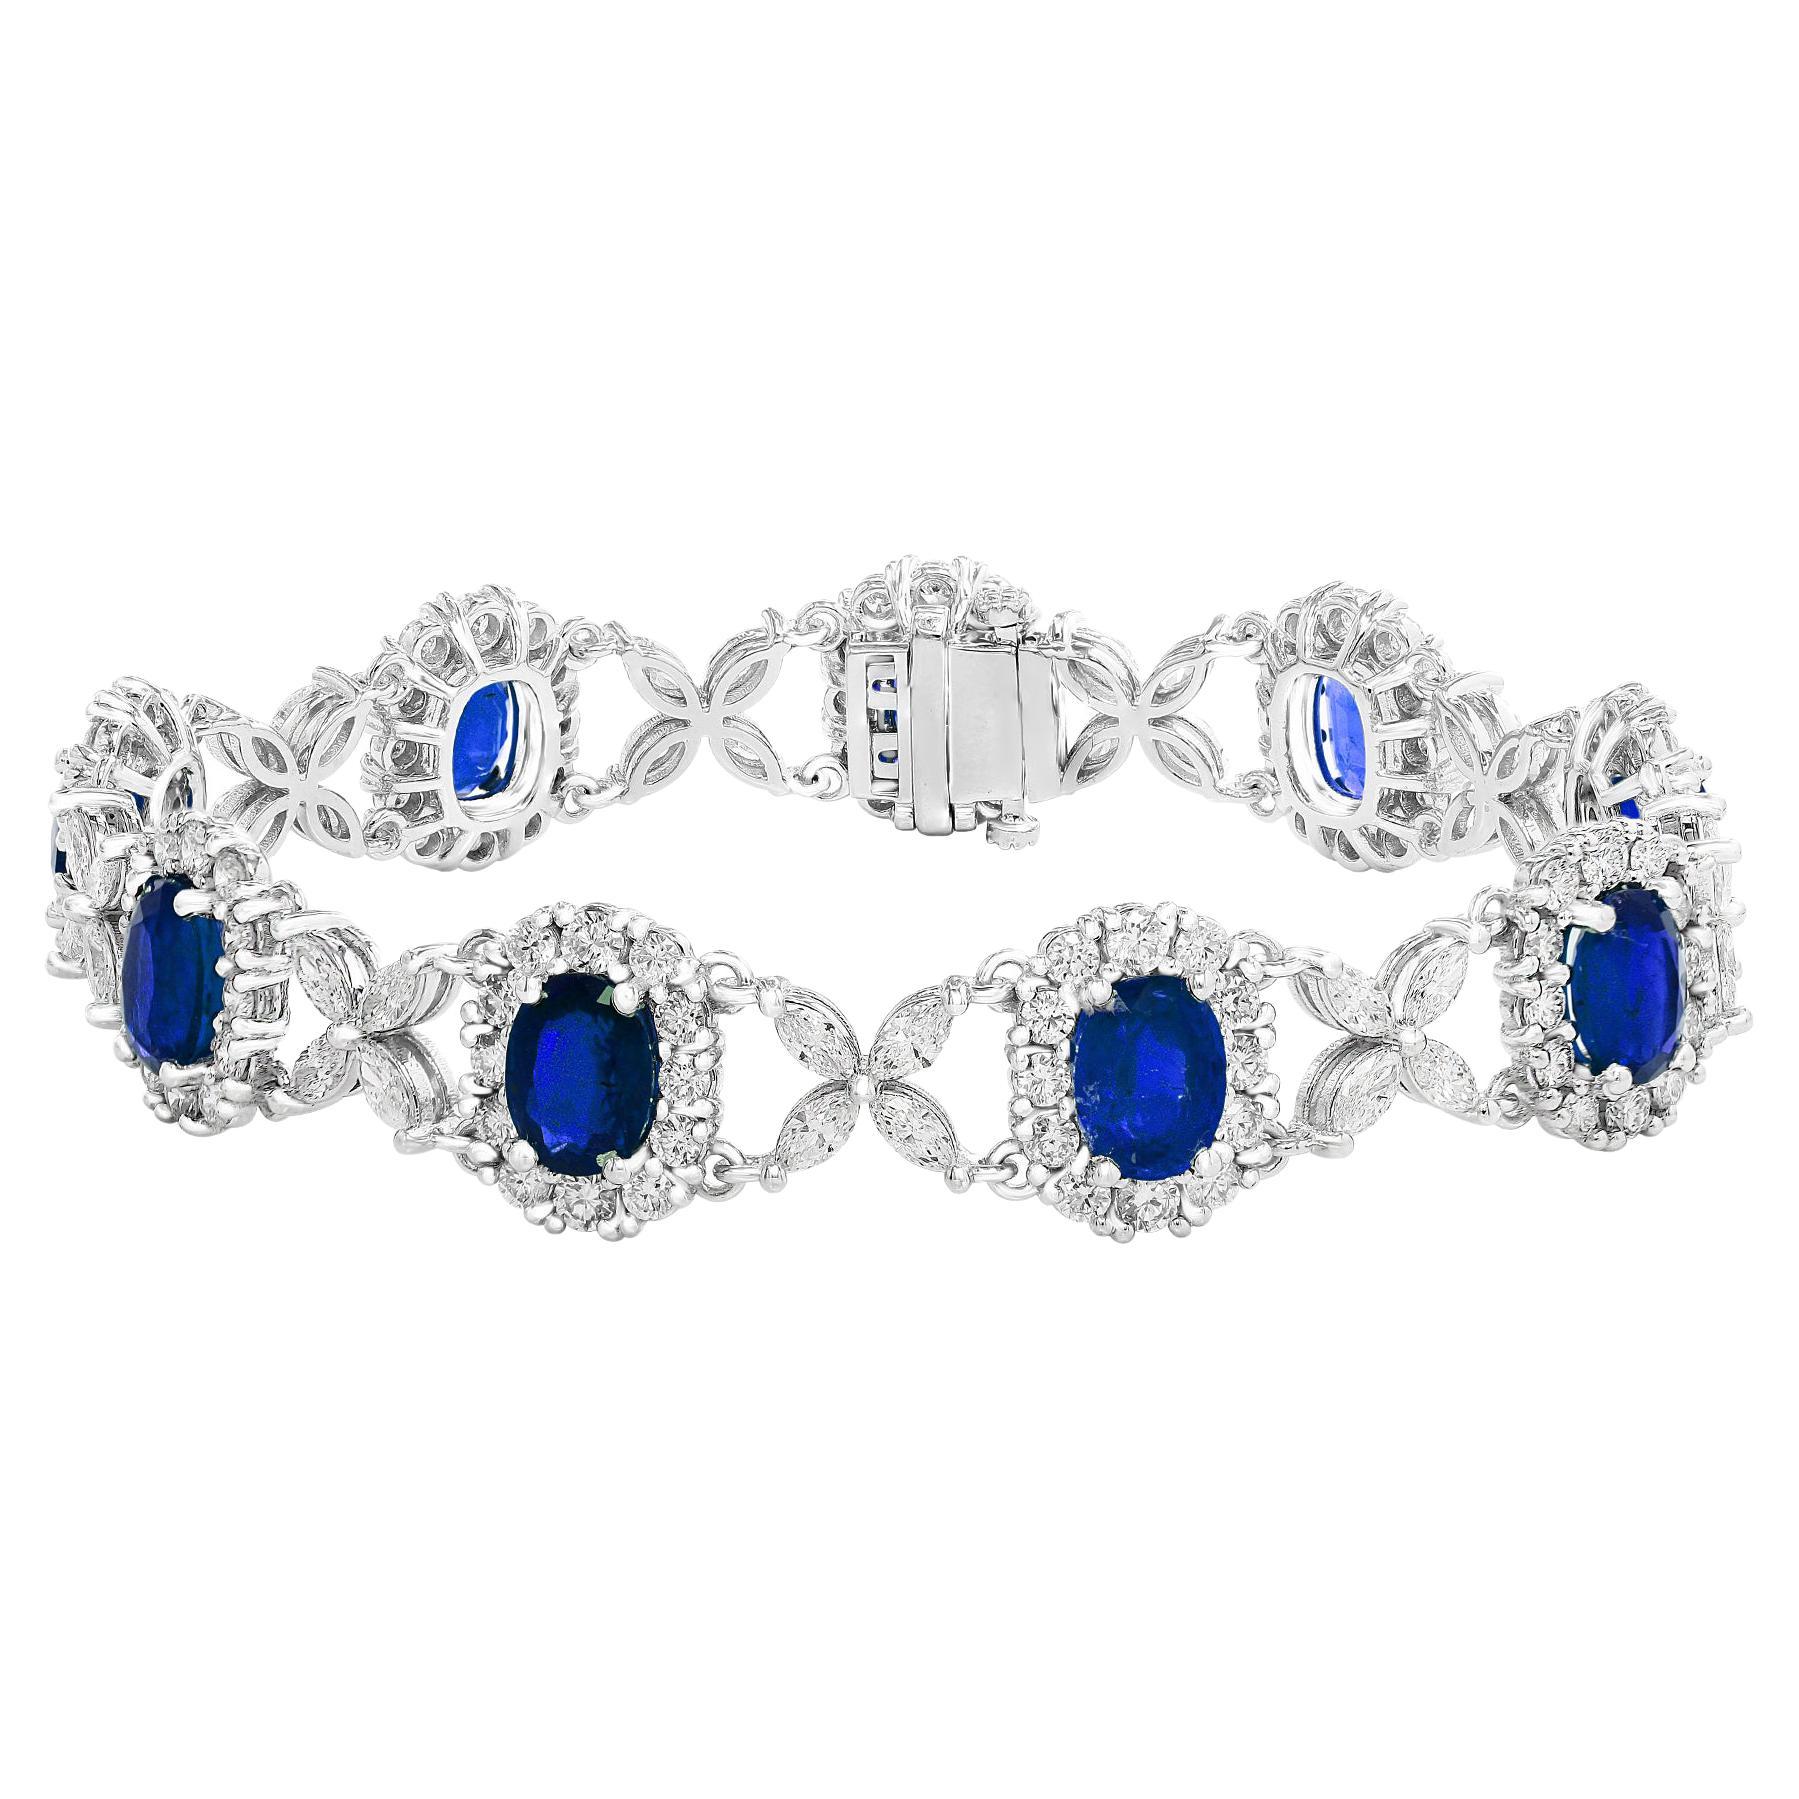 11.47 Carat Oval Cut Blue Sapphire and Diamond Tennis Bracelet in 14K White Gold